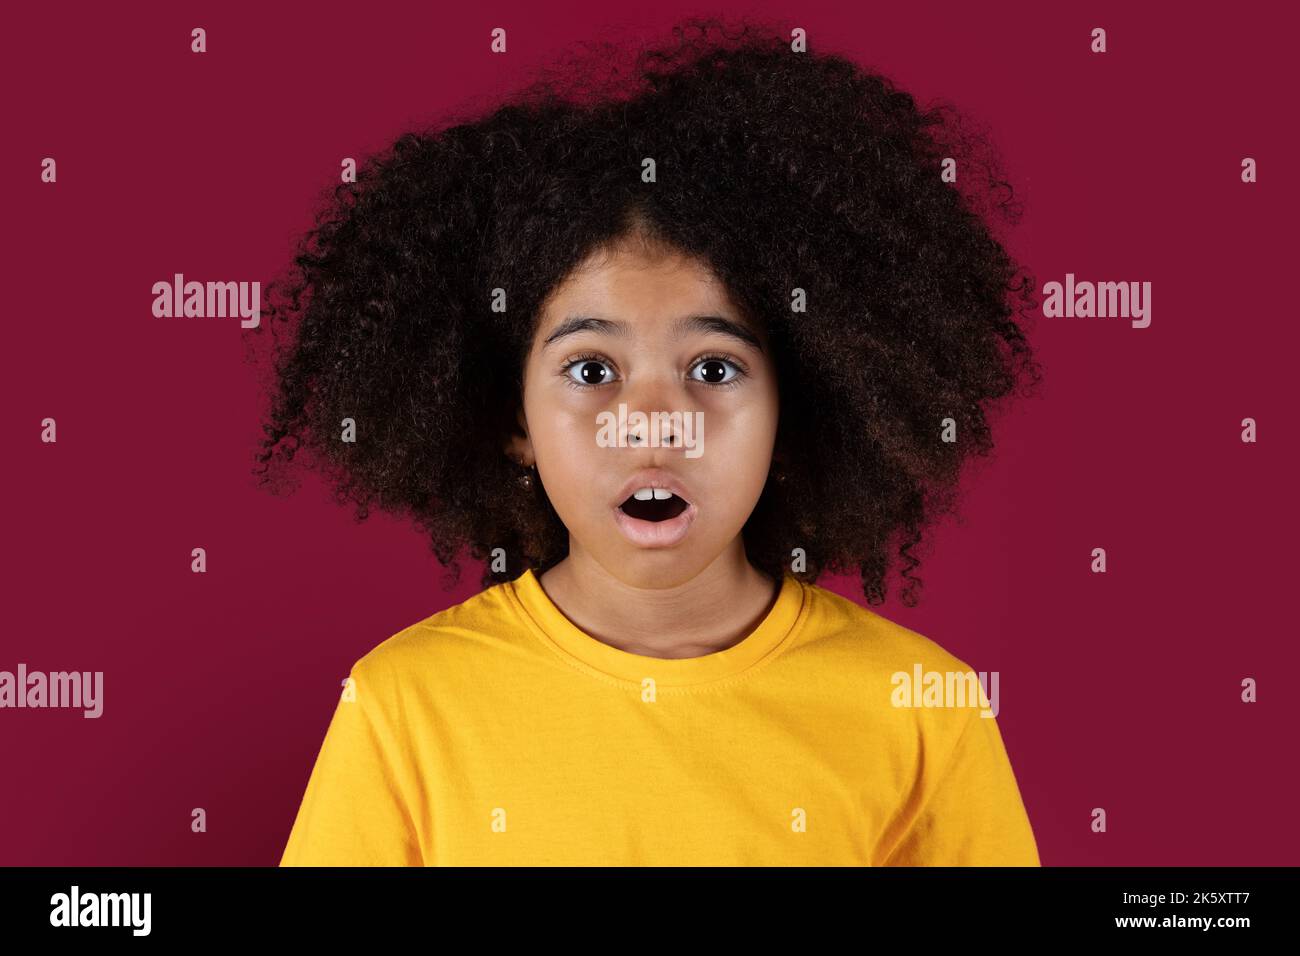 Portrait of shocked black girl on colorful background Stock Photo